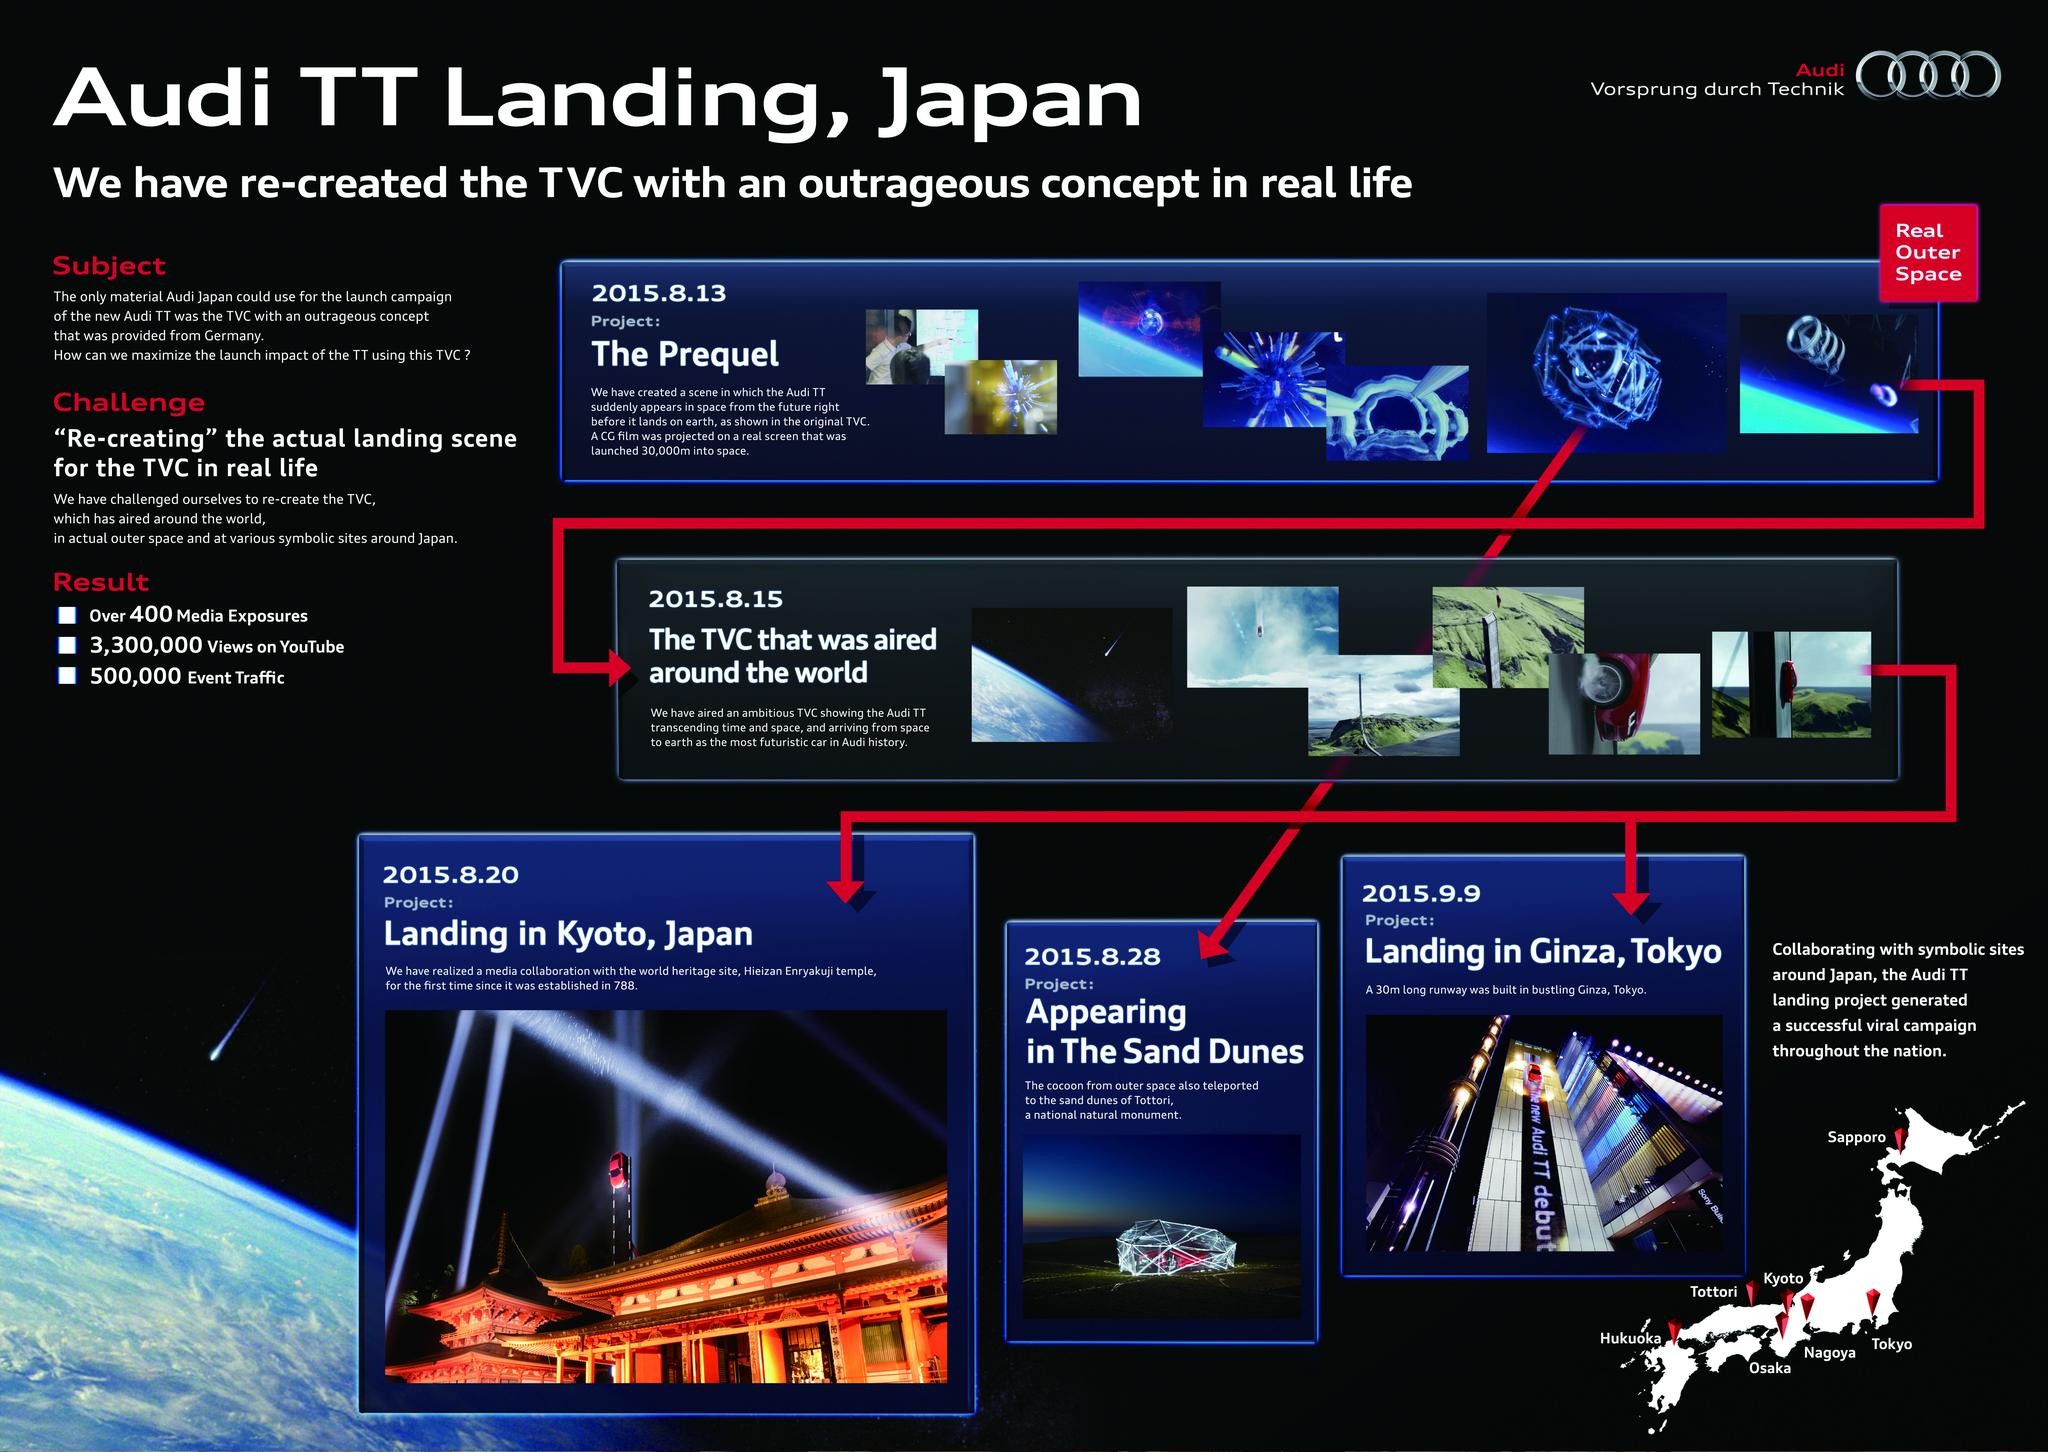 Audi TT Landing, Japan Project